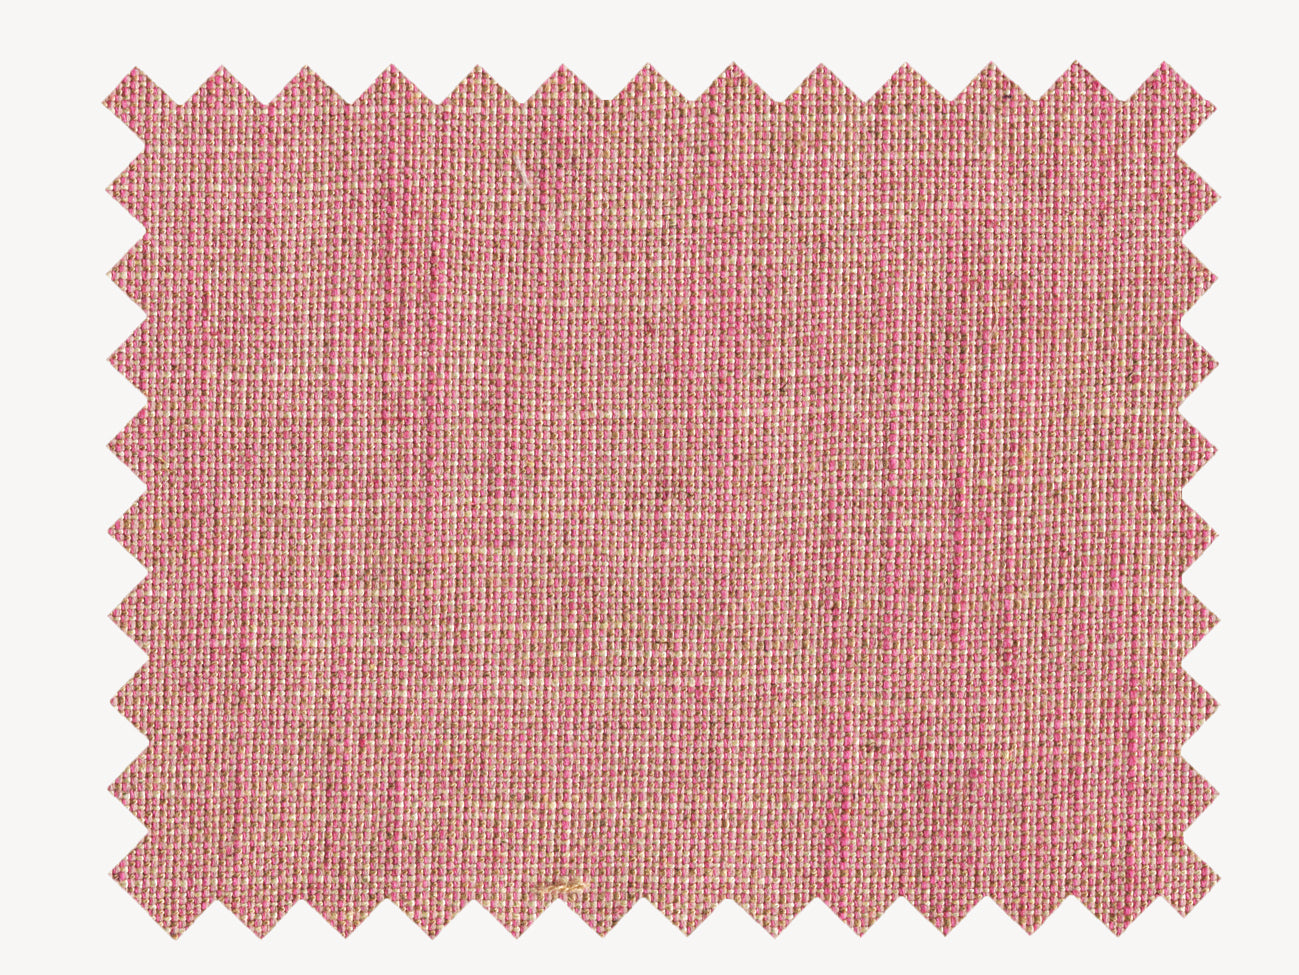 Patmos Jacket | Pink Acer